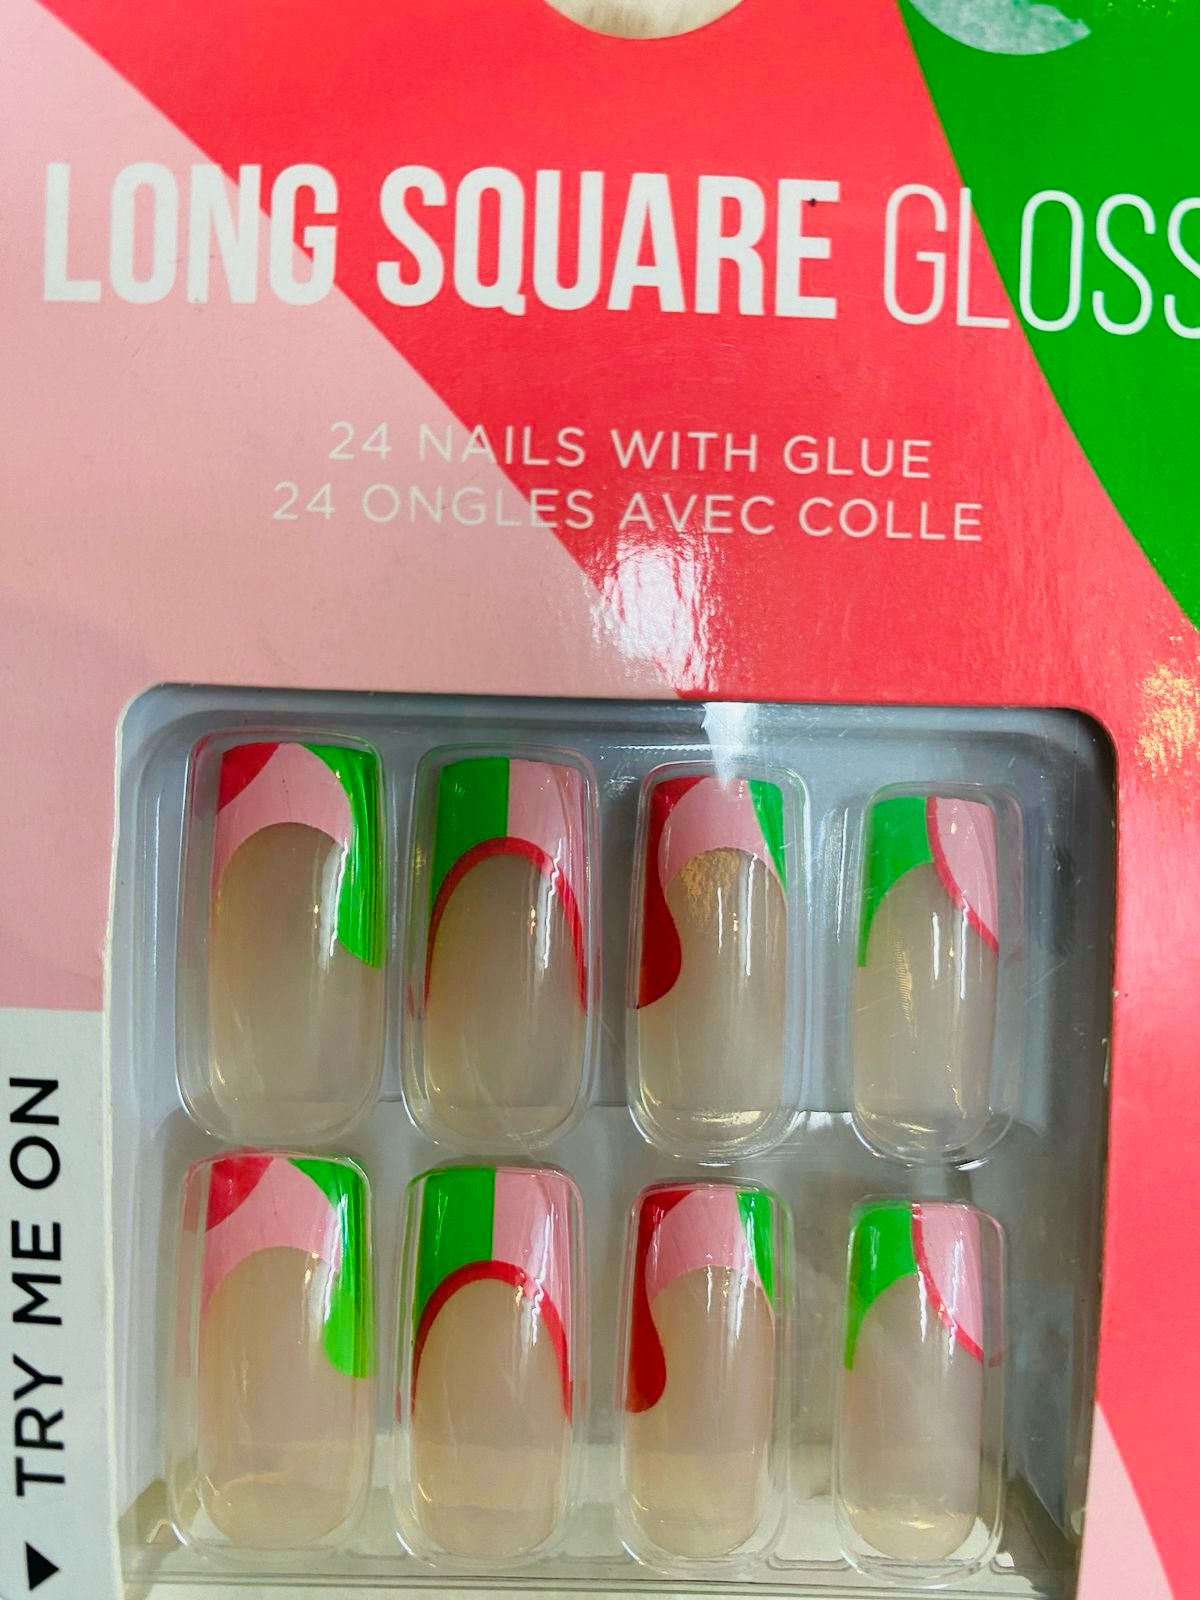 Long square gloss